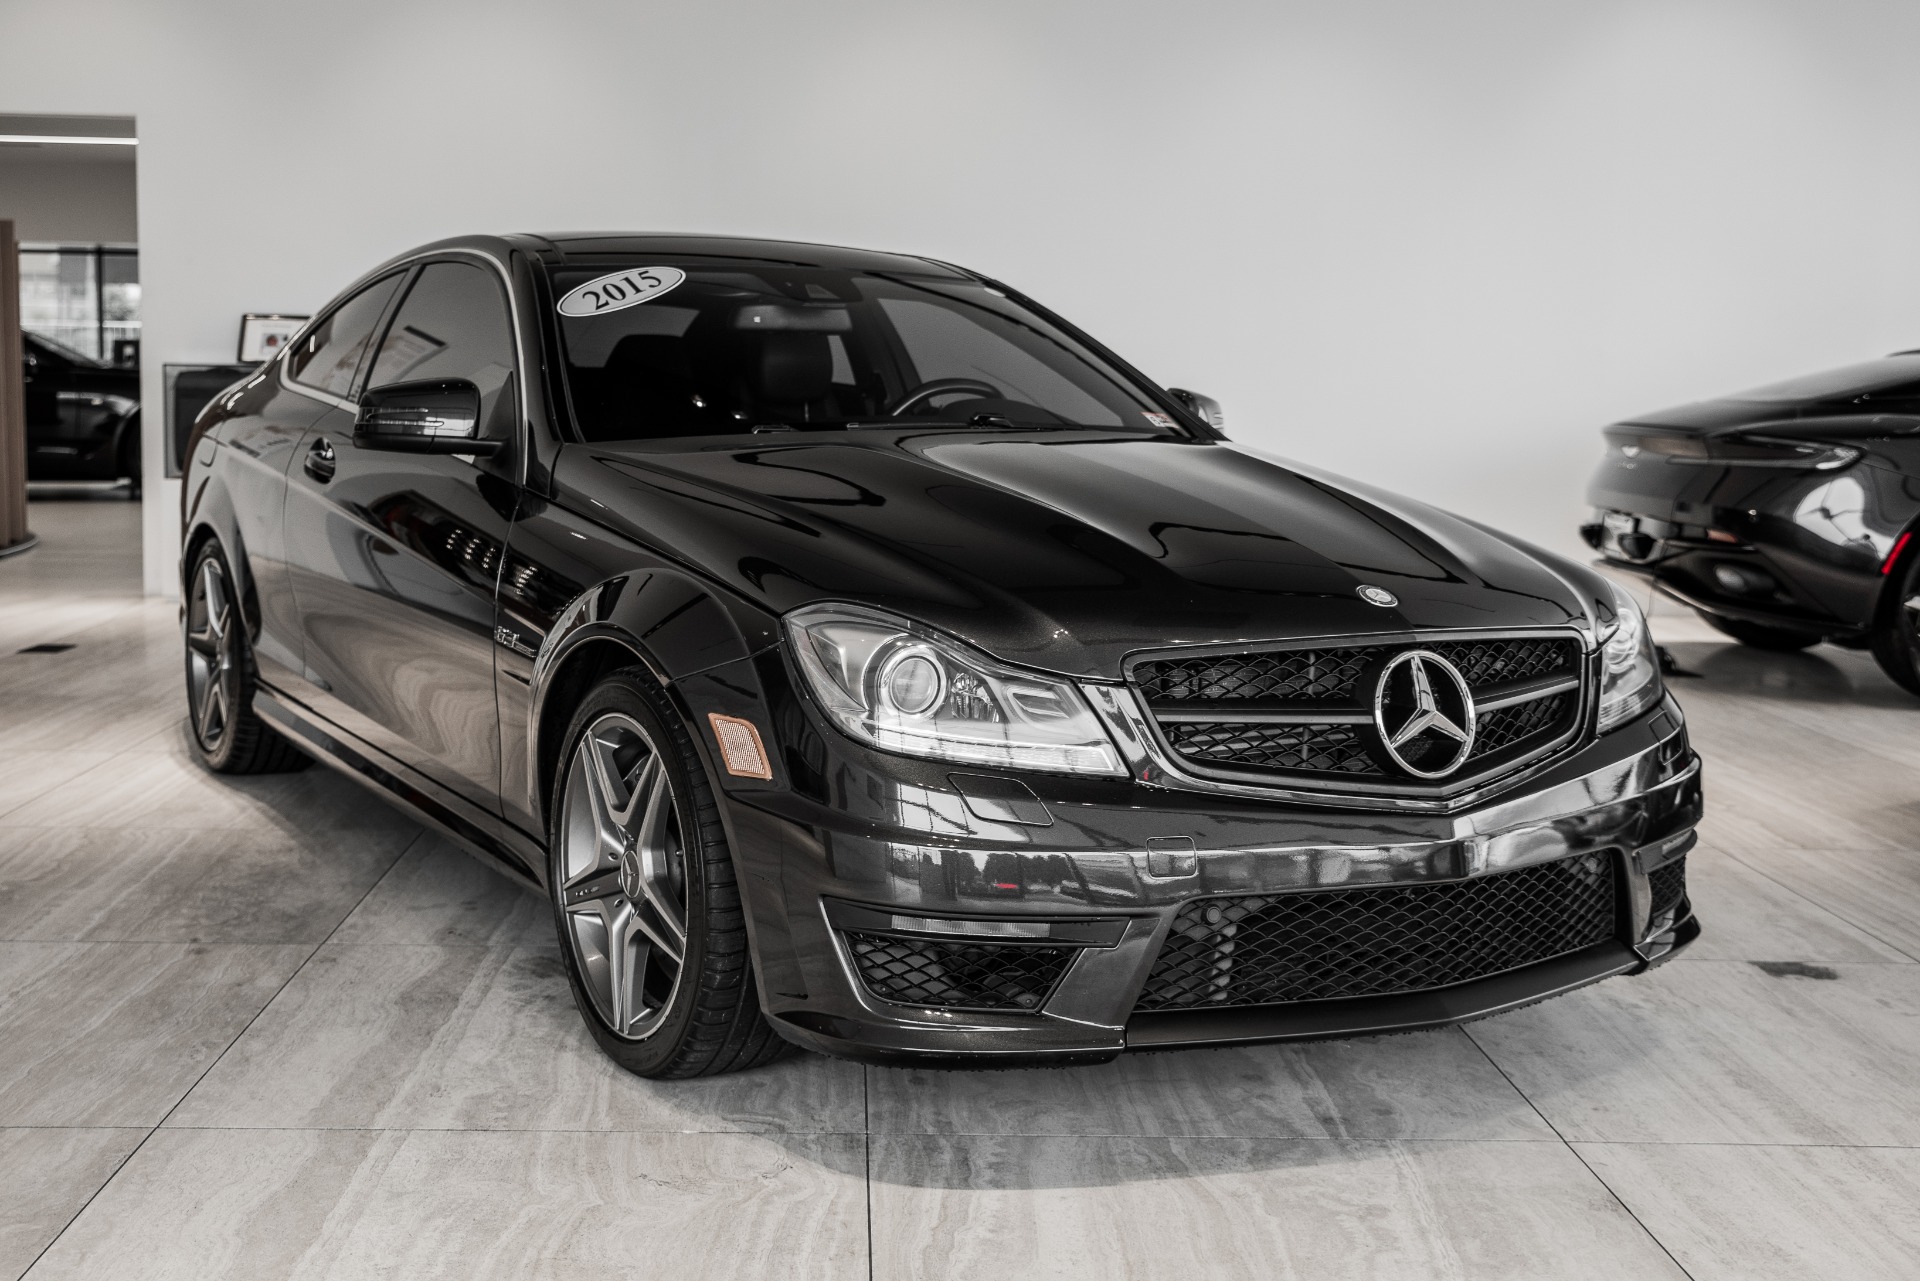 2015 Mercedes-Benz C-Class C 63 AMG Stock # P369303 for sale near Vienna, VA | VA Mercedes-Benz ...